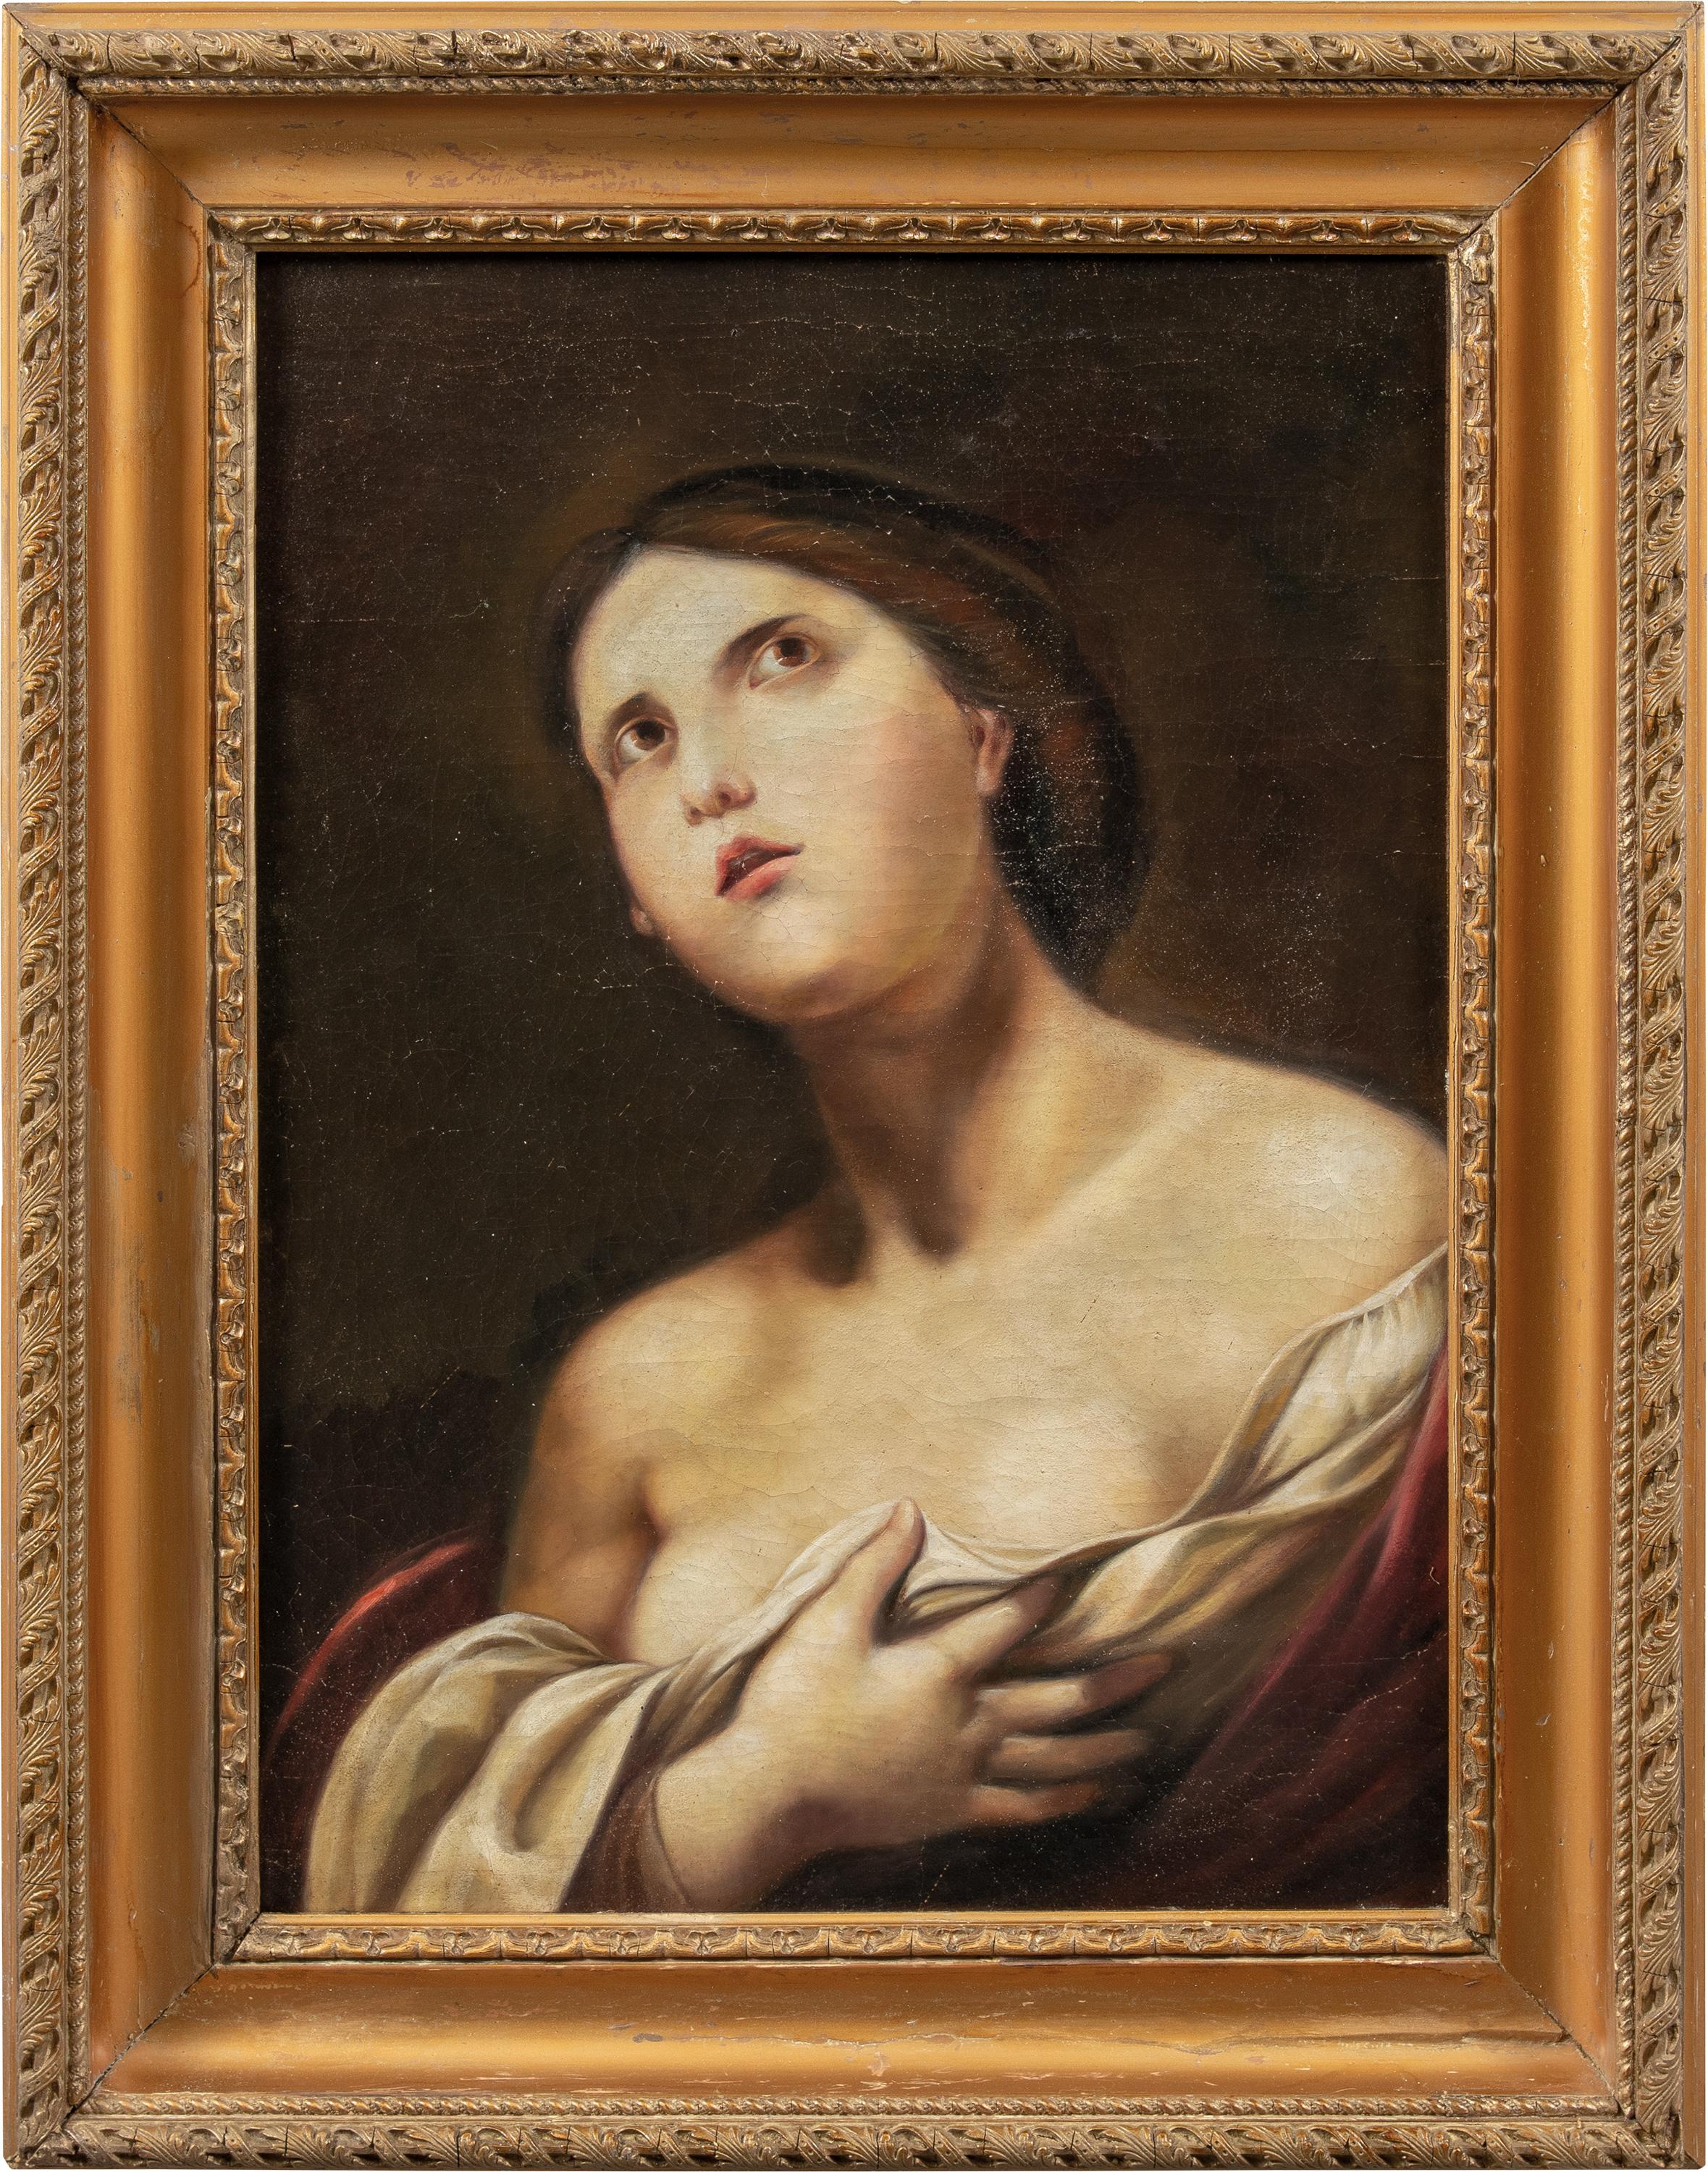 Antique Italian painter - 18th-19th century figure painting - Oil on canvas 5